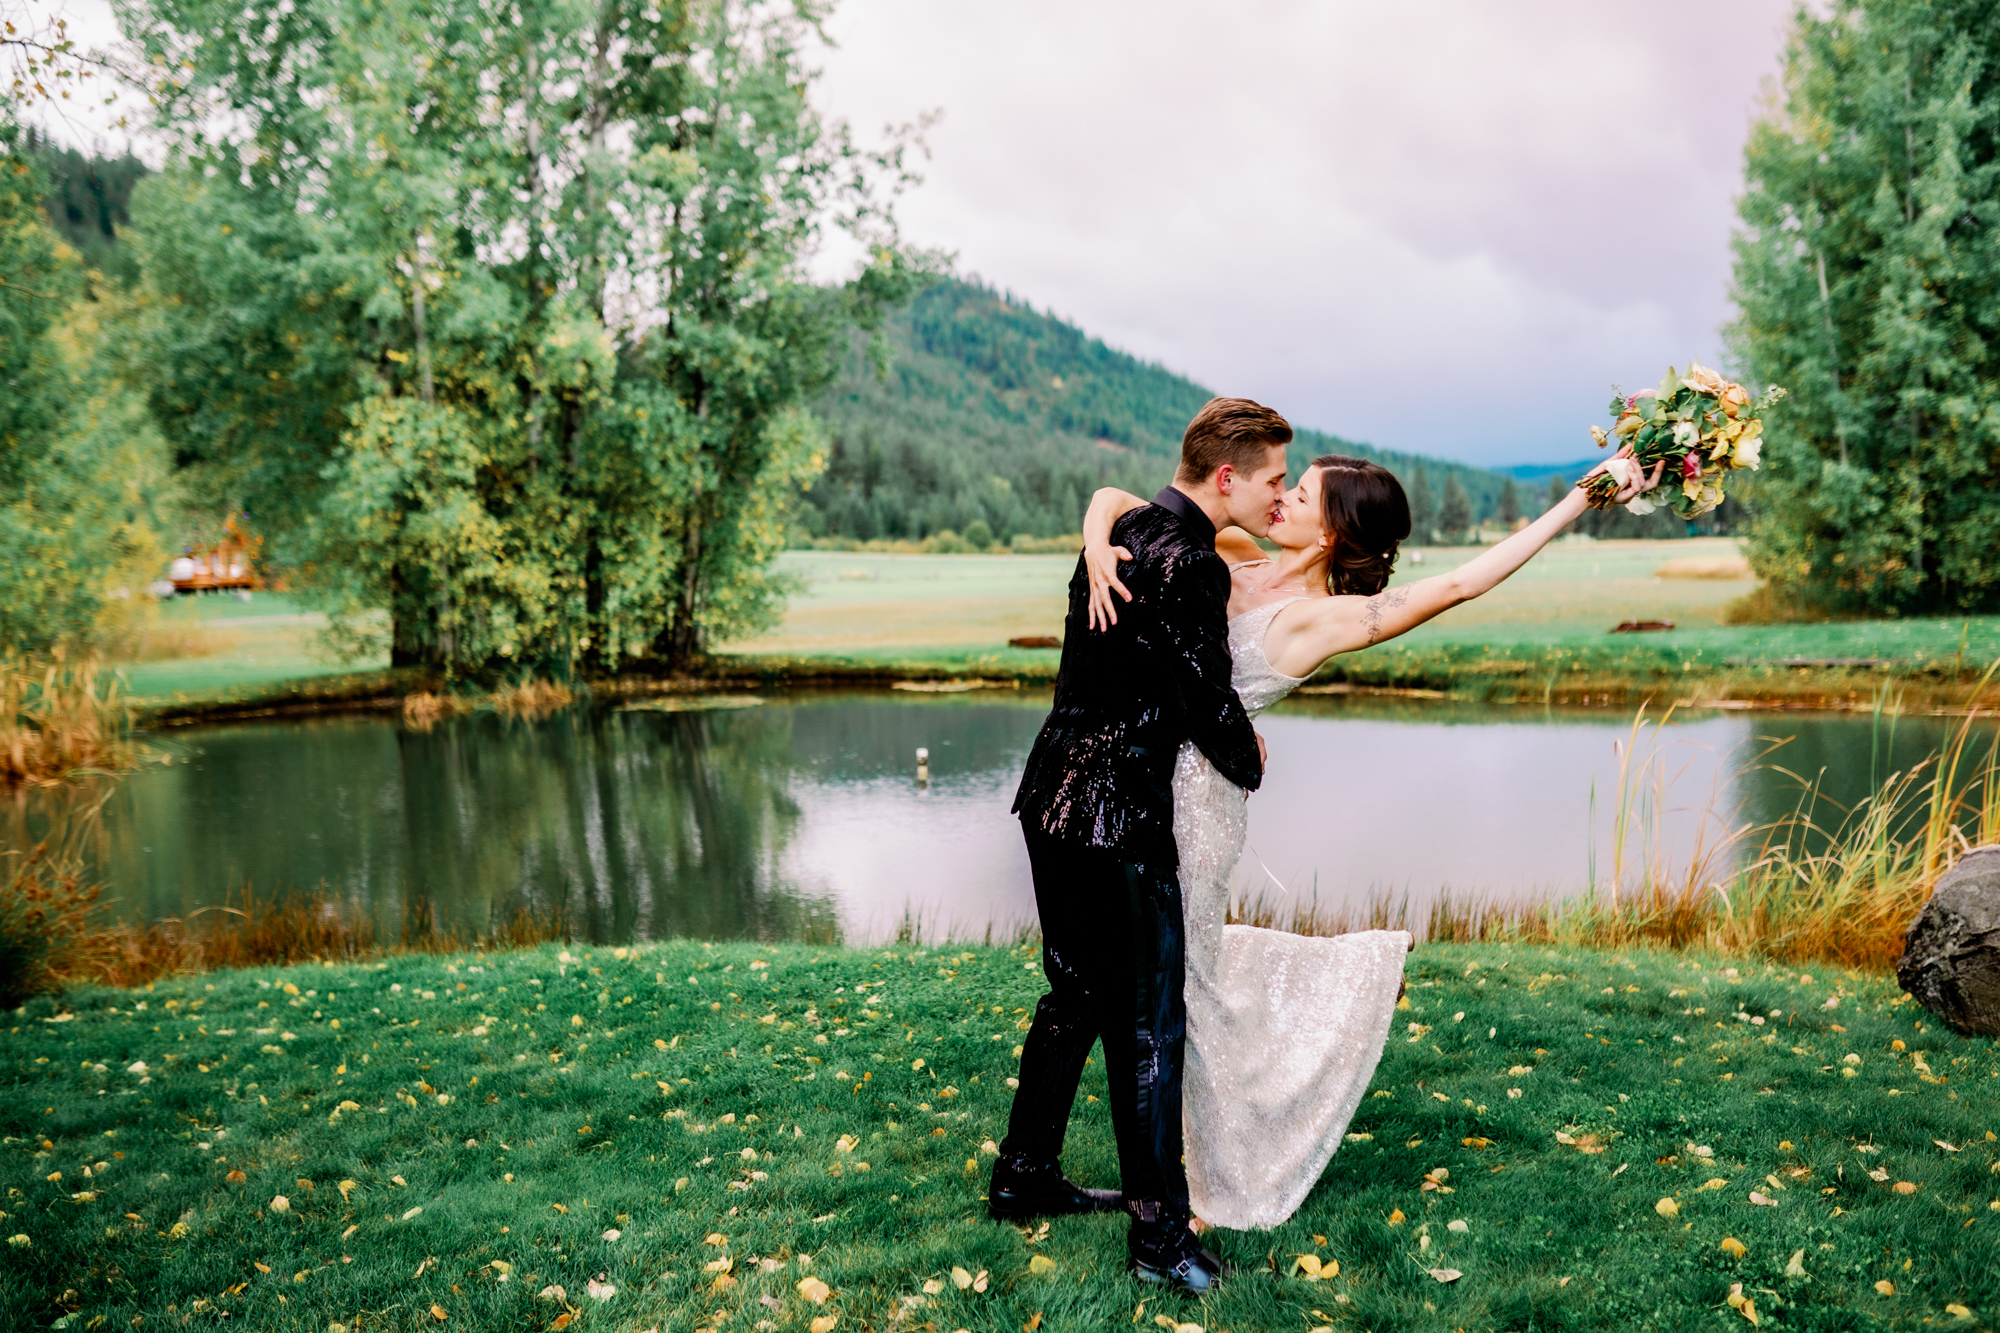 Mountain Springs Lodge weddings: Veronica and Fletcher celebrate!